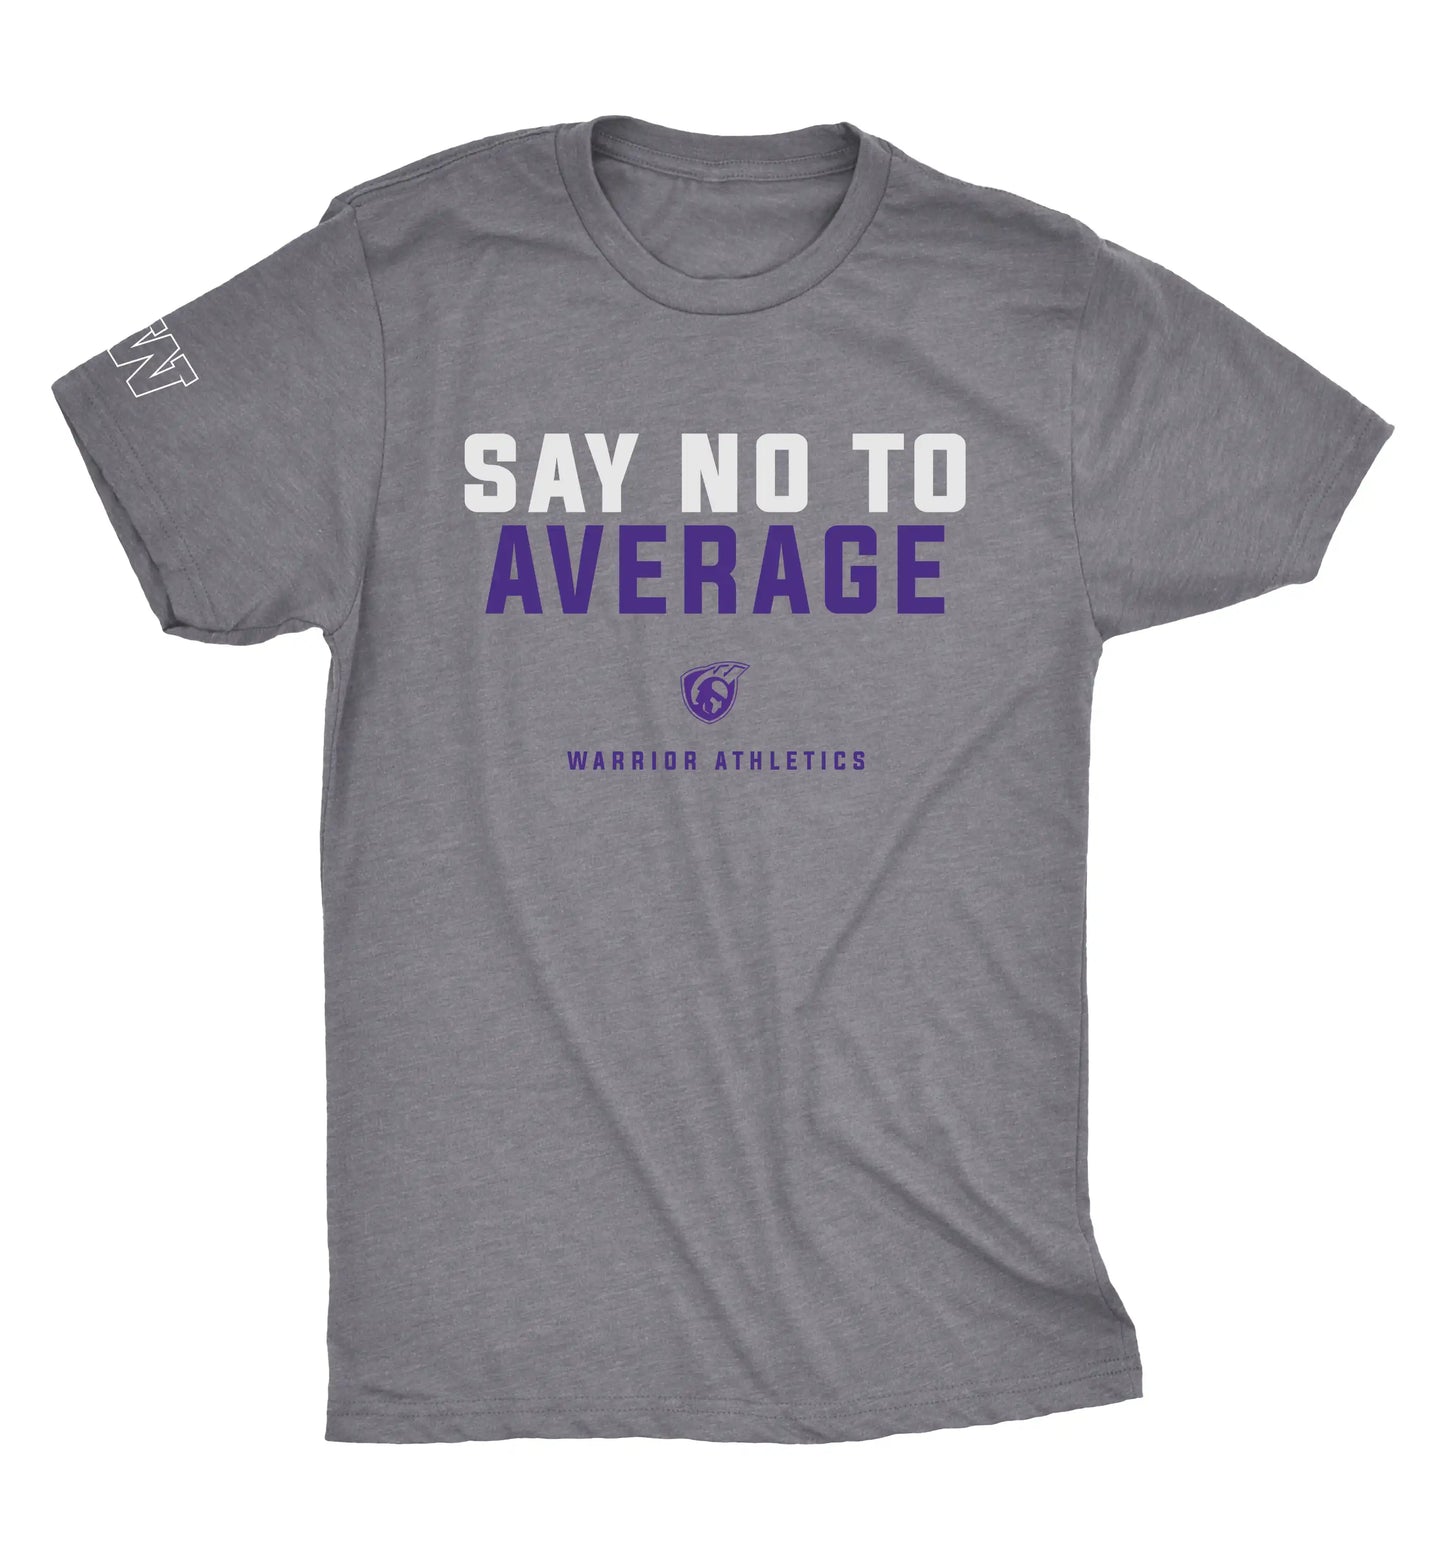 Say No to Average - Warrior Athletics Tshirt